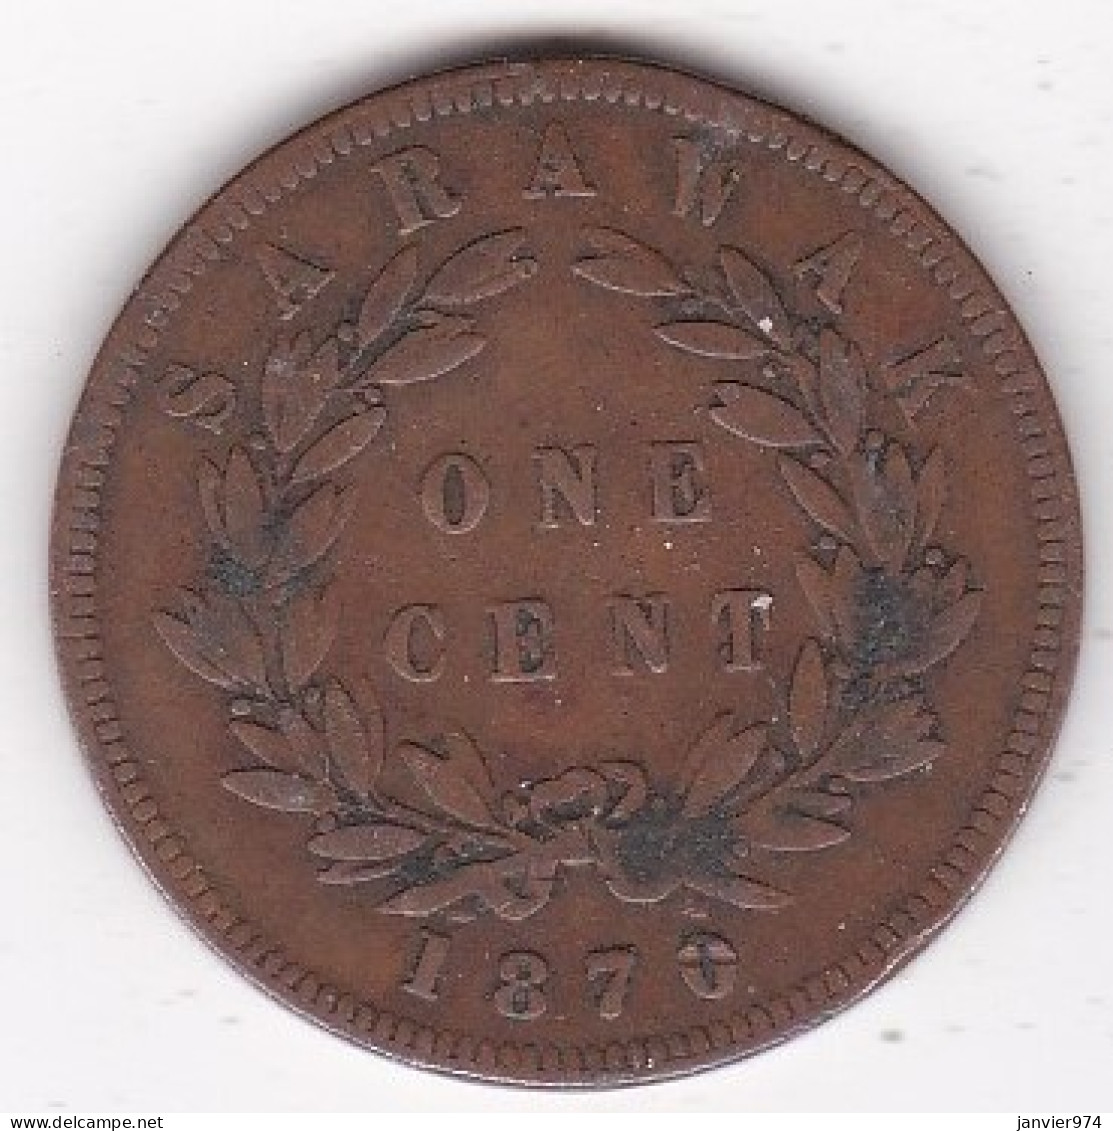 Sarawak . One Cent 1870 . C. BROOKE RAJAH. KM# 6 - Malasia